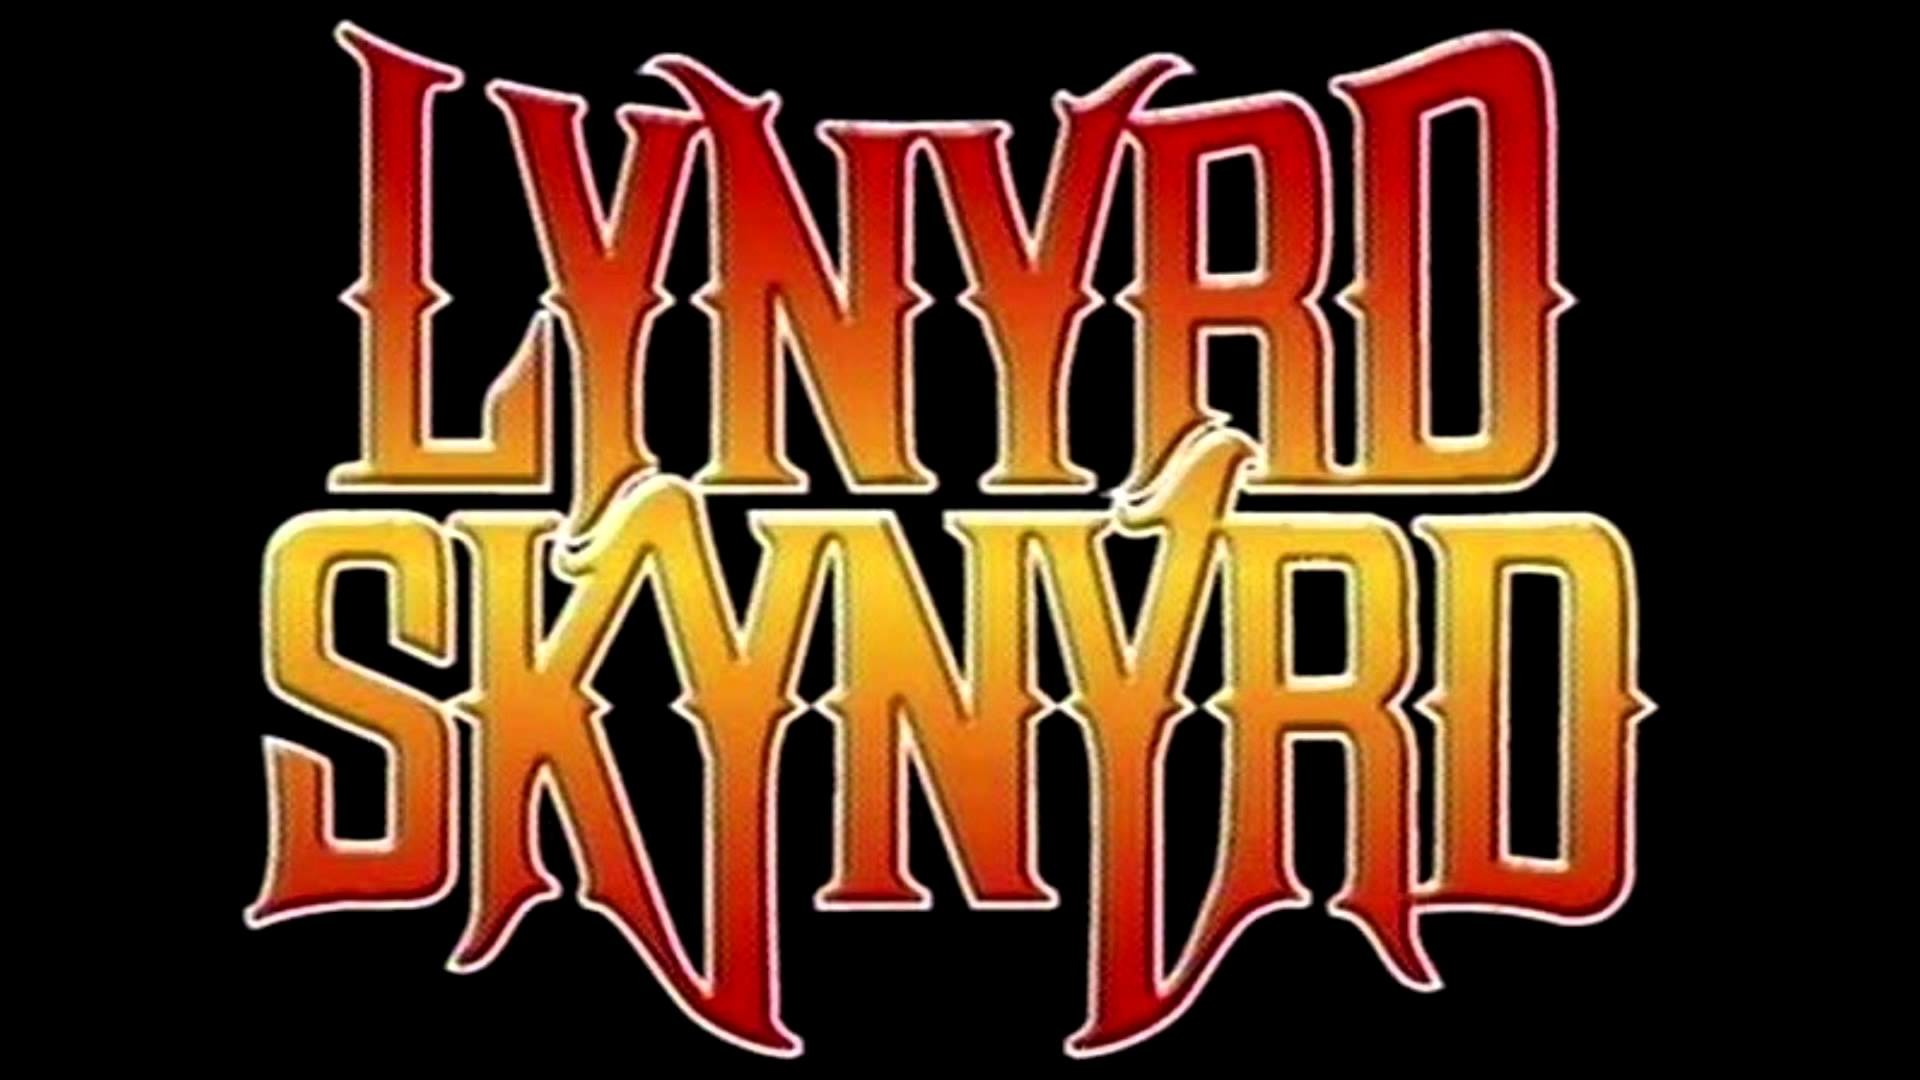 1920x1080 ... Amazon.com: Lynyrd Skynyrd Poster - Free Bird - Rare New Hot 24x36 .